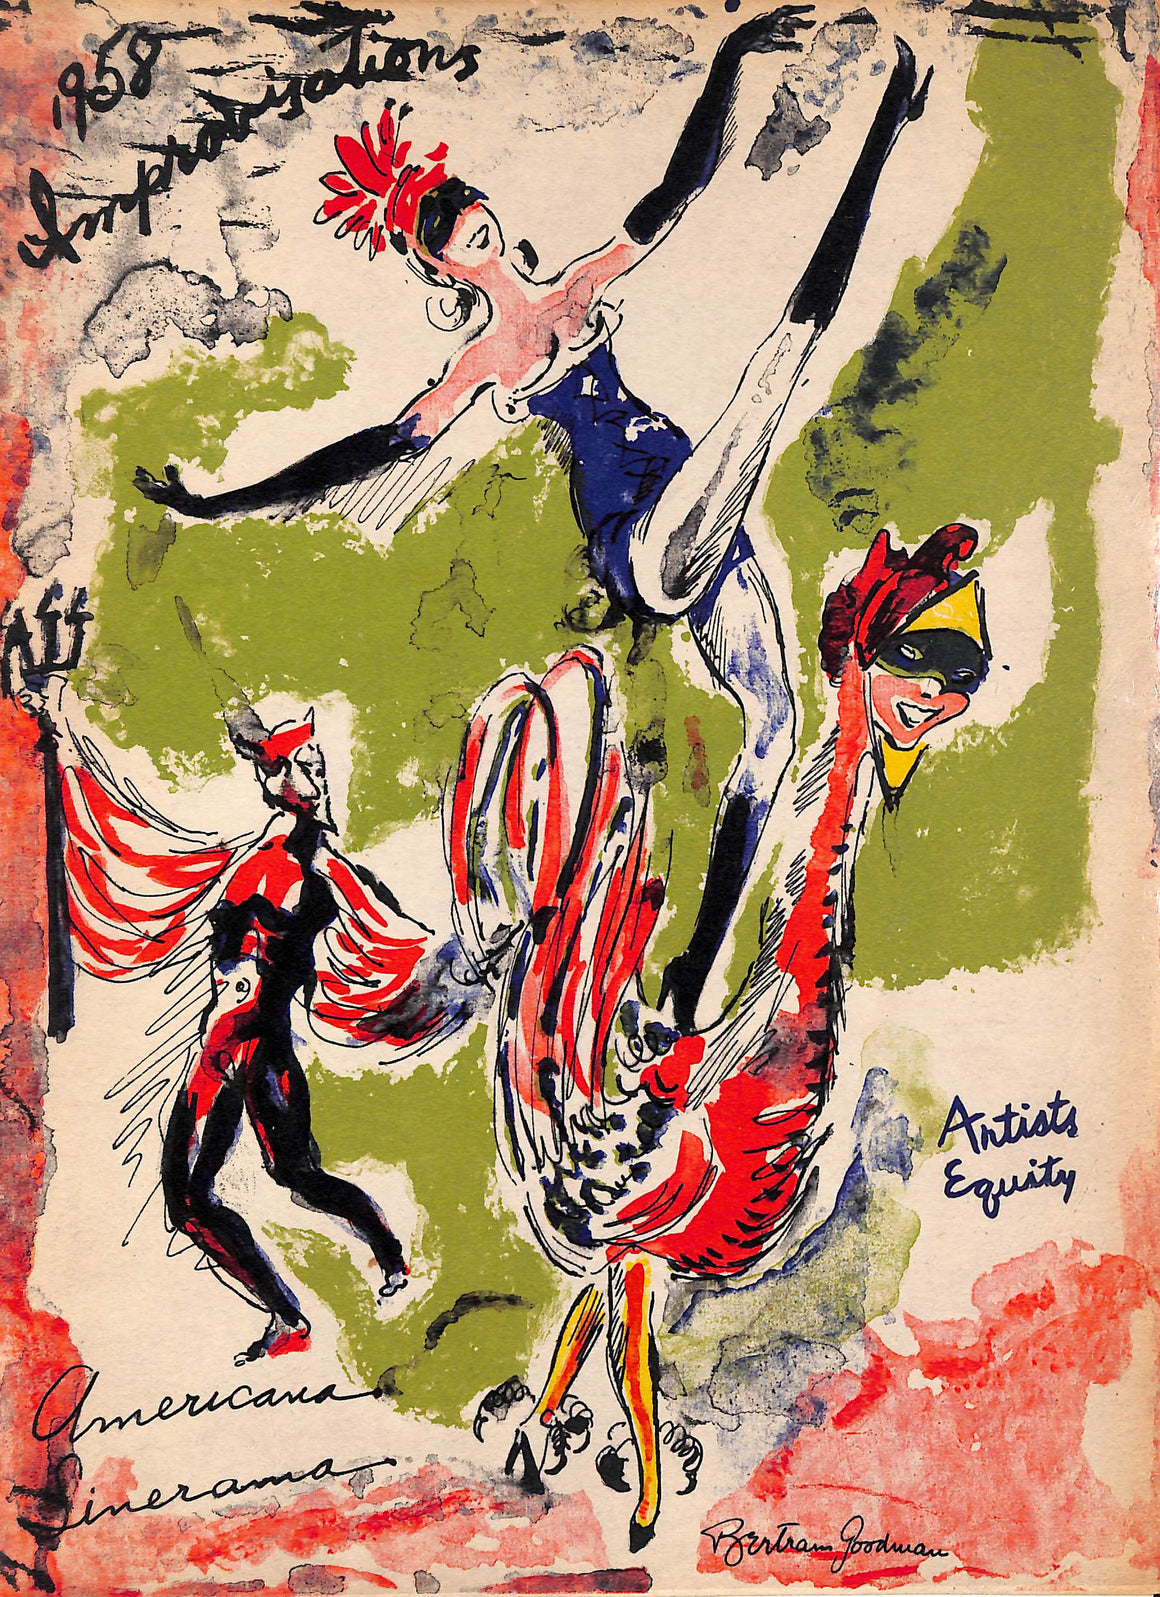 "Improvisations 1958. Artists Equity Fund Americana Sineramal: The Waldorf-Astoria, March 28, 1958.; Bal Fantastique, Volume IX" GOODMAN, Bertram [art and technical director]